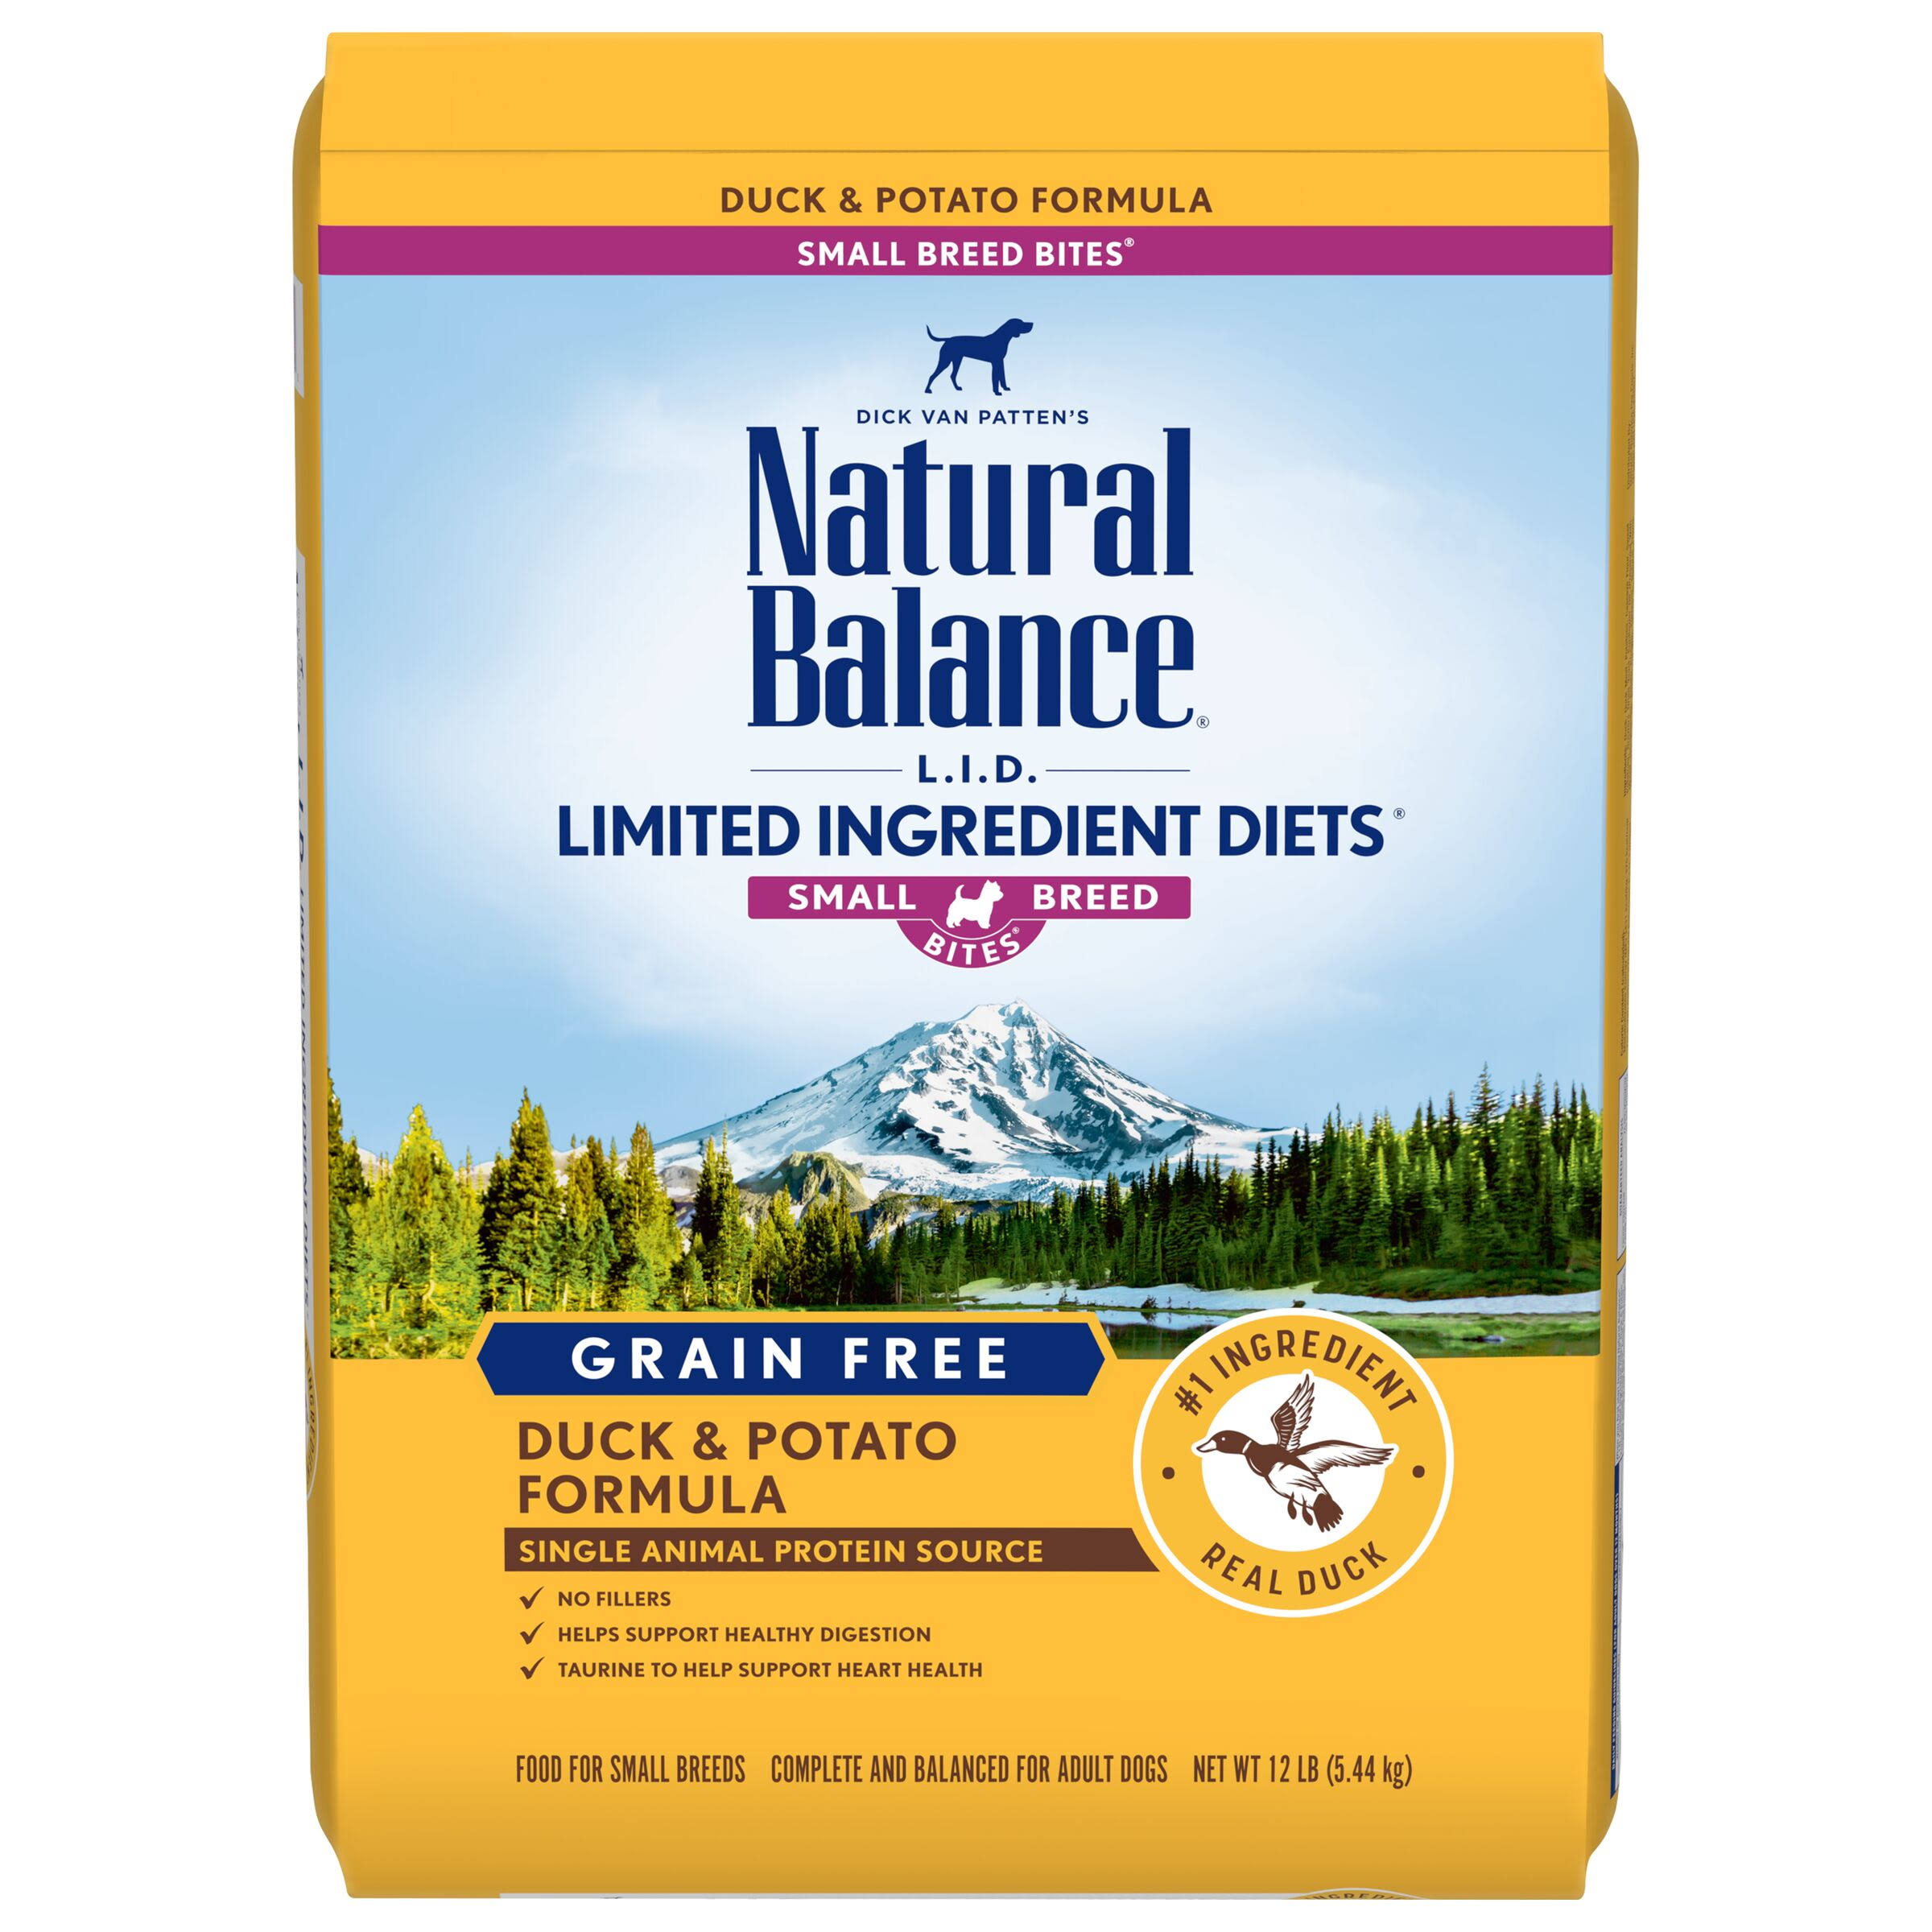 Natural Balance Limited Ingredient Diet Duck & Potato